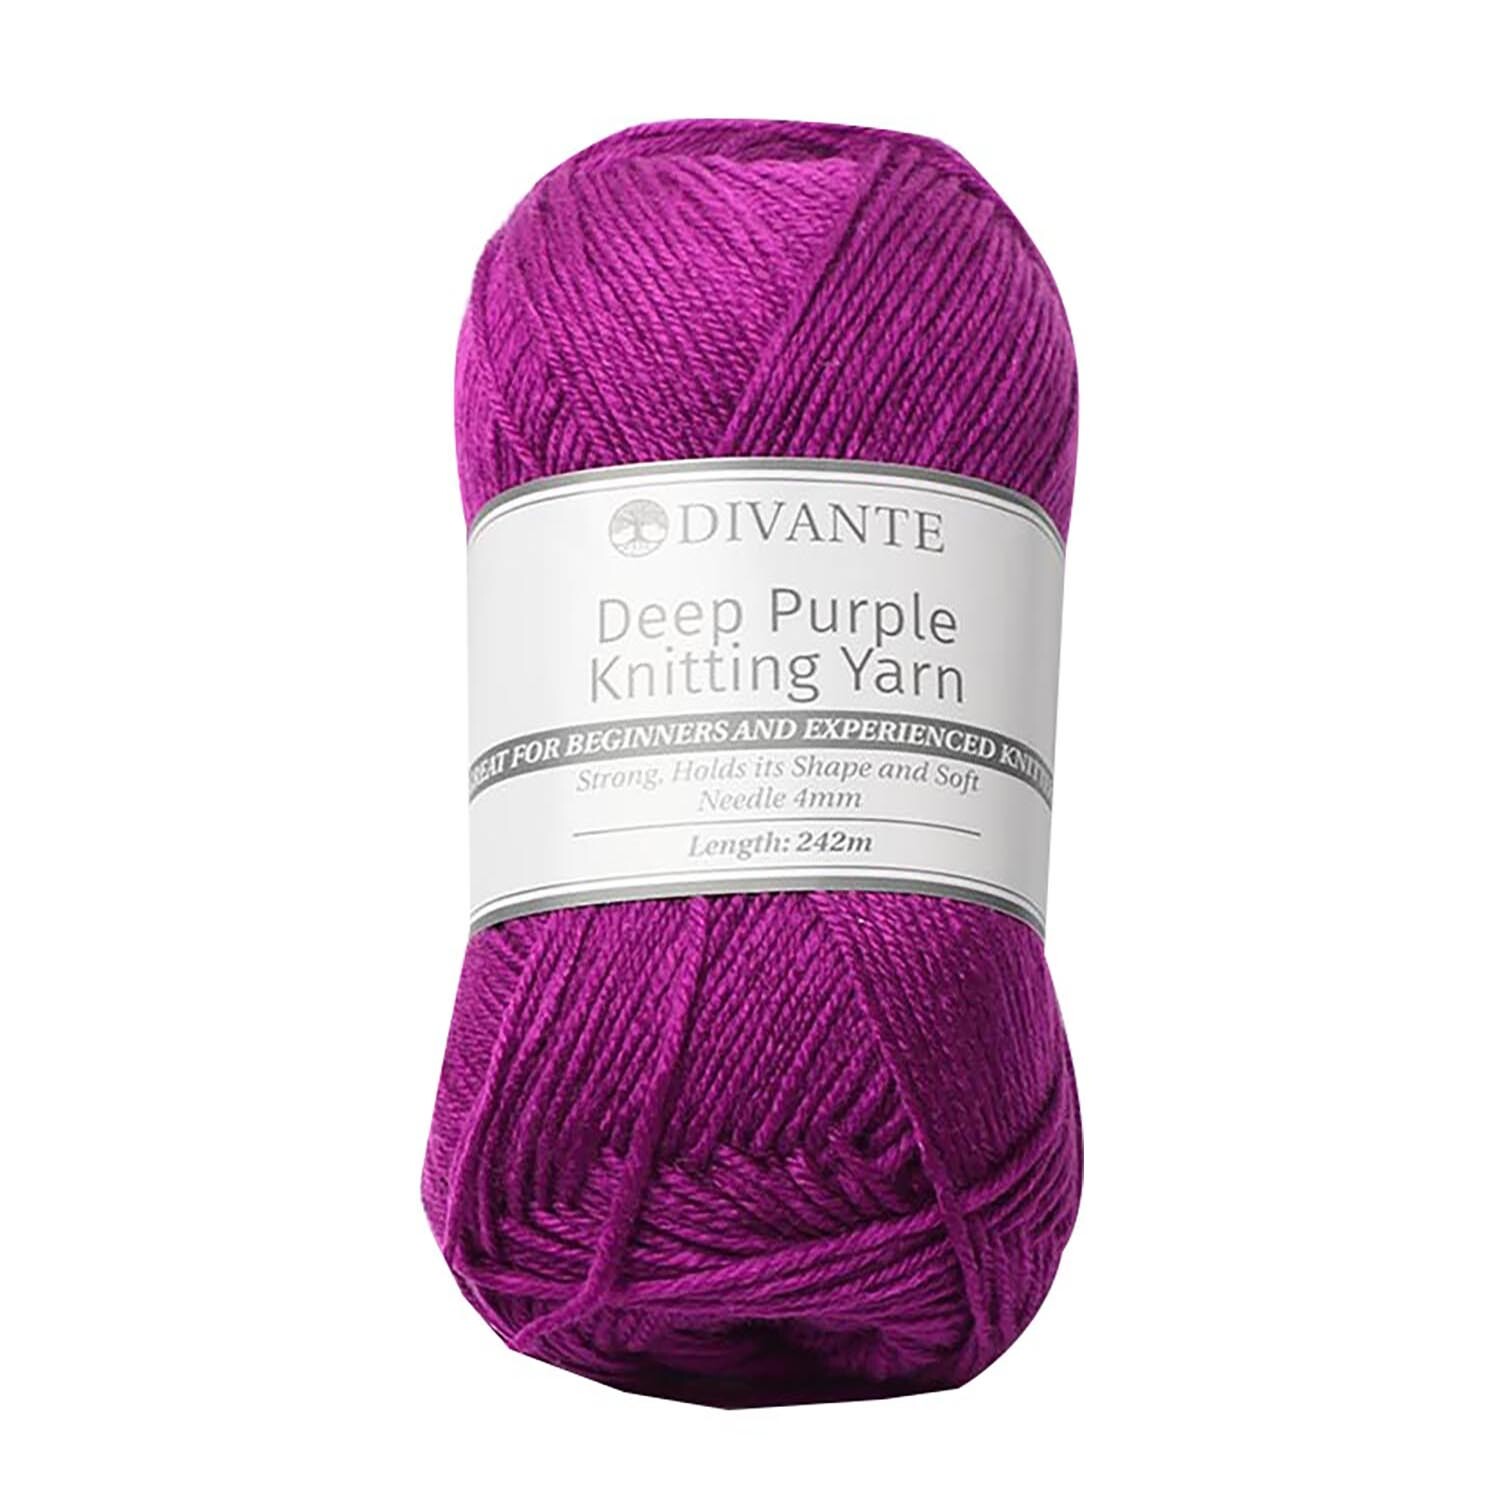 Divante Basic Knitting Yarn - Deep Purple Image